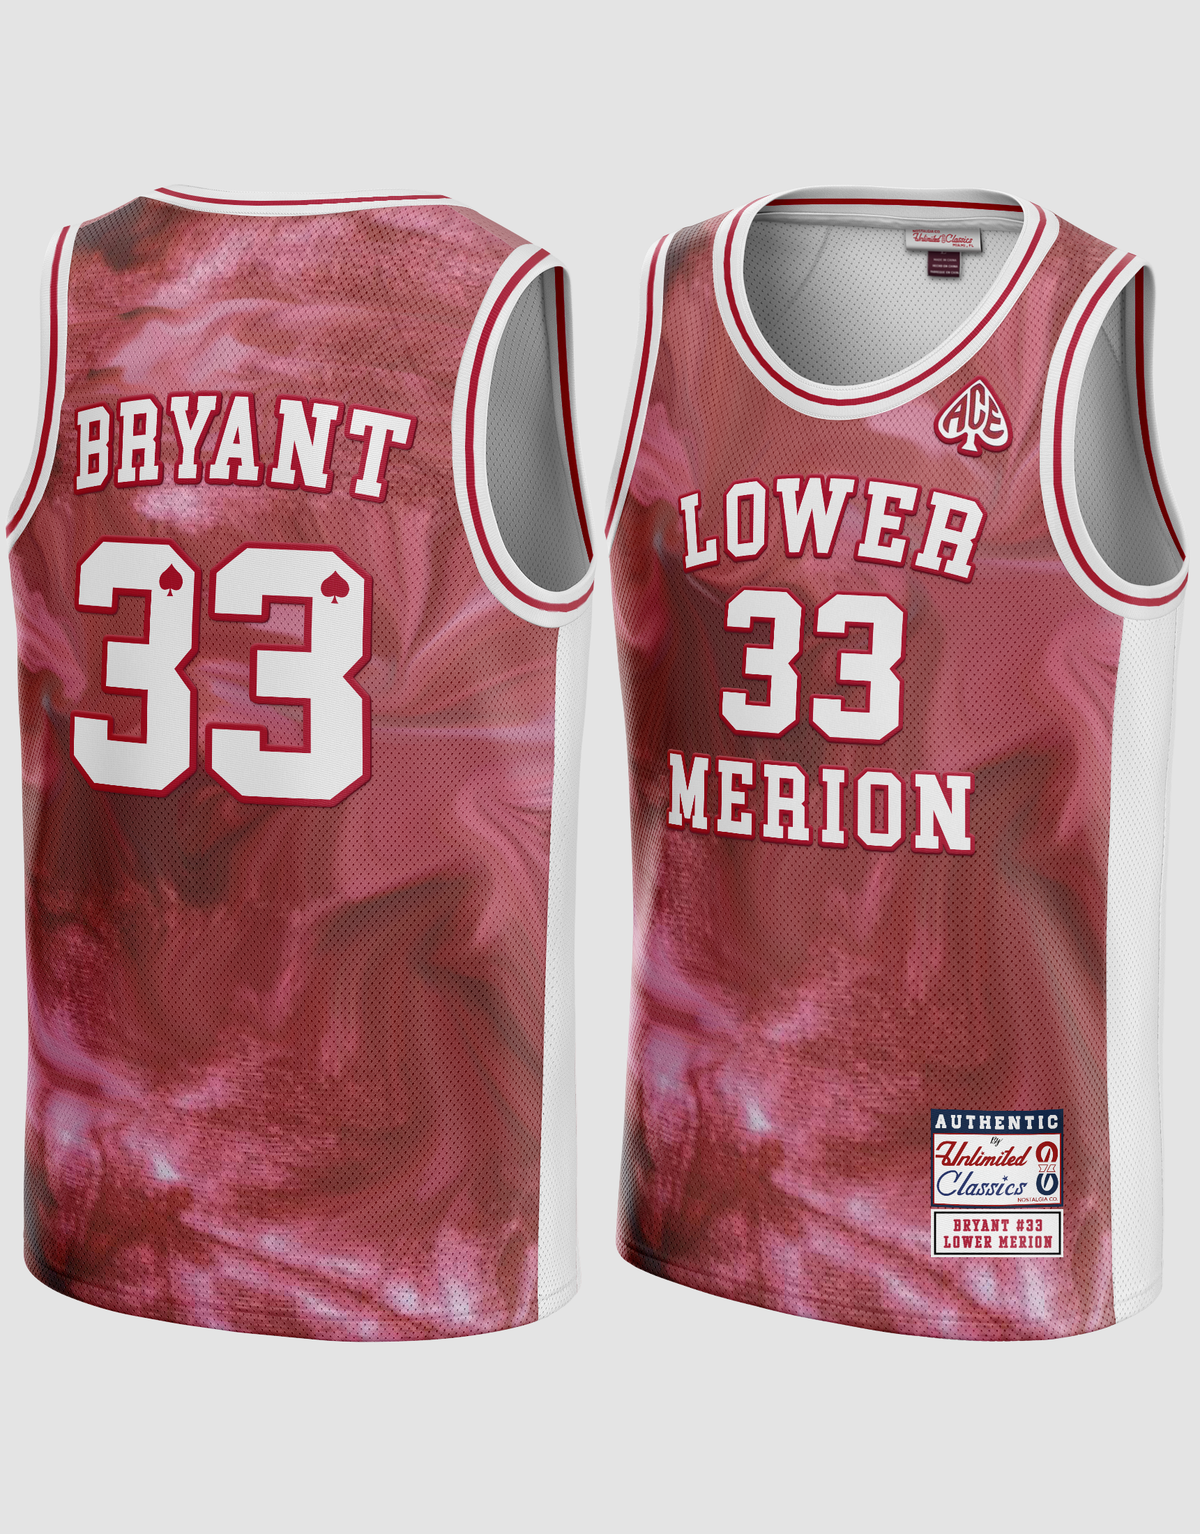 Kobe Bryant #33 Lower Merion Tie-Dye Edition Jersey